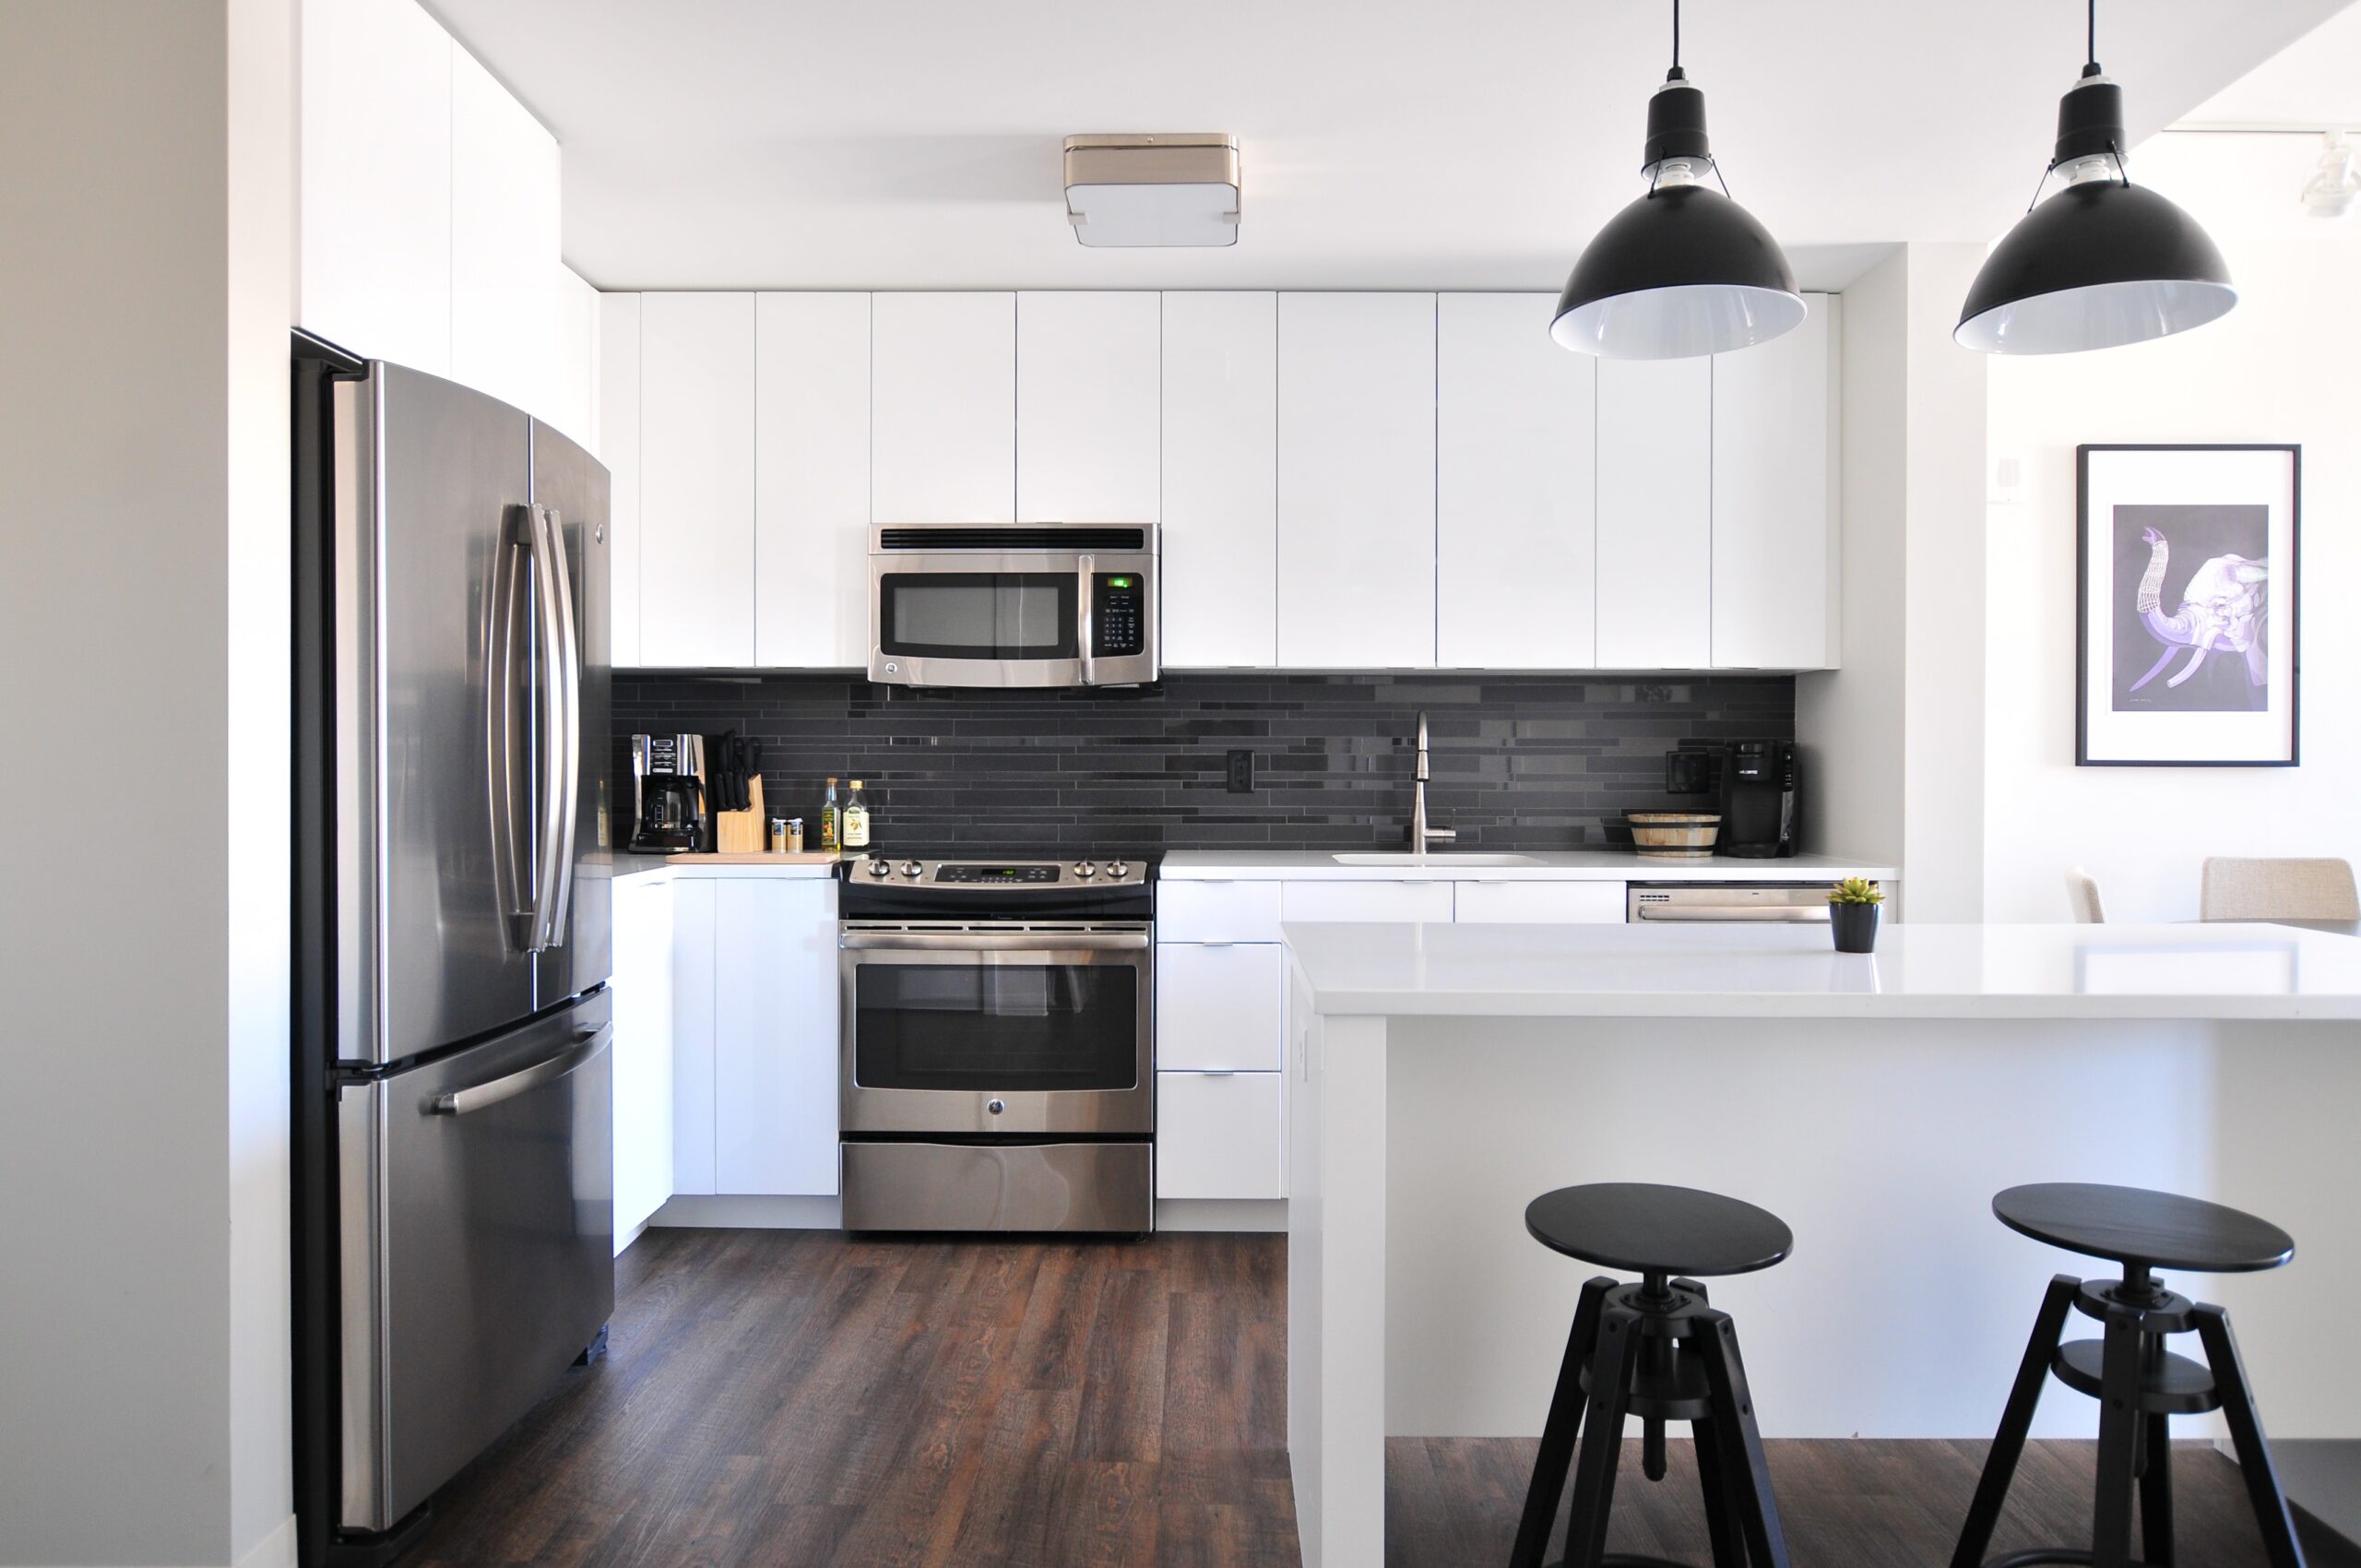 White kitchen with modern appliances and dark wood floors